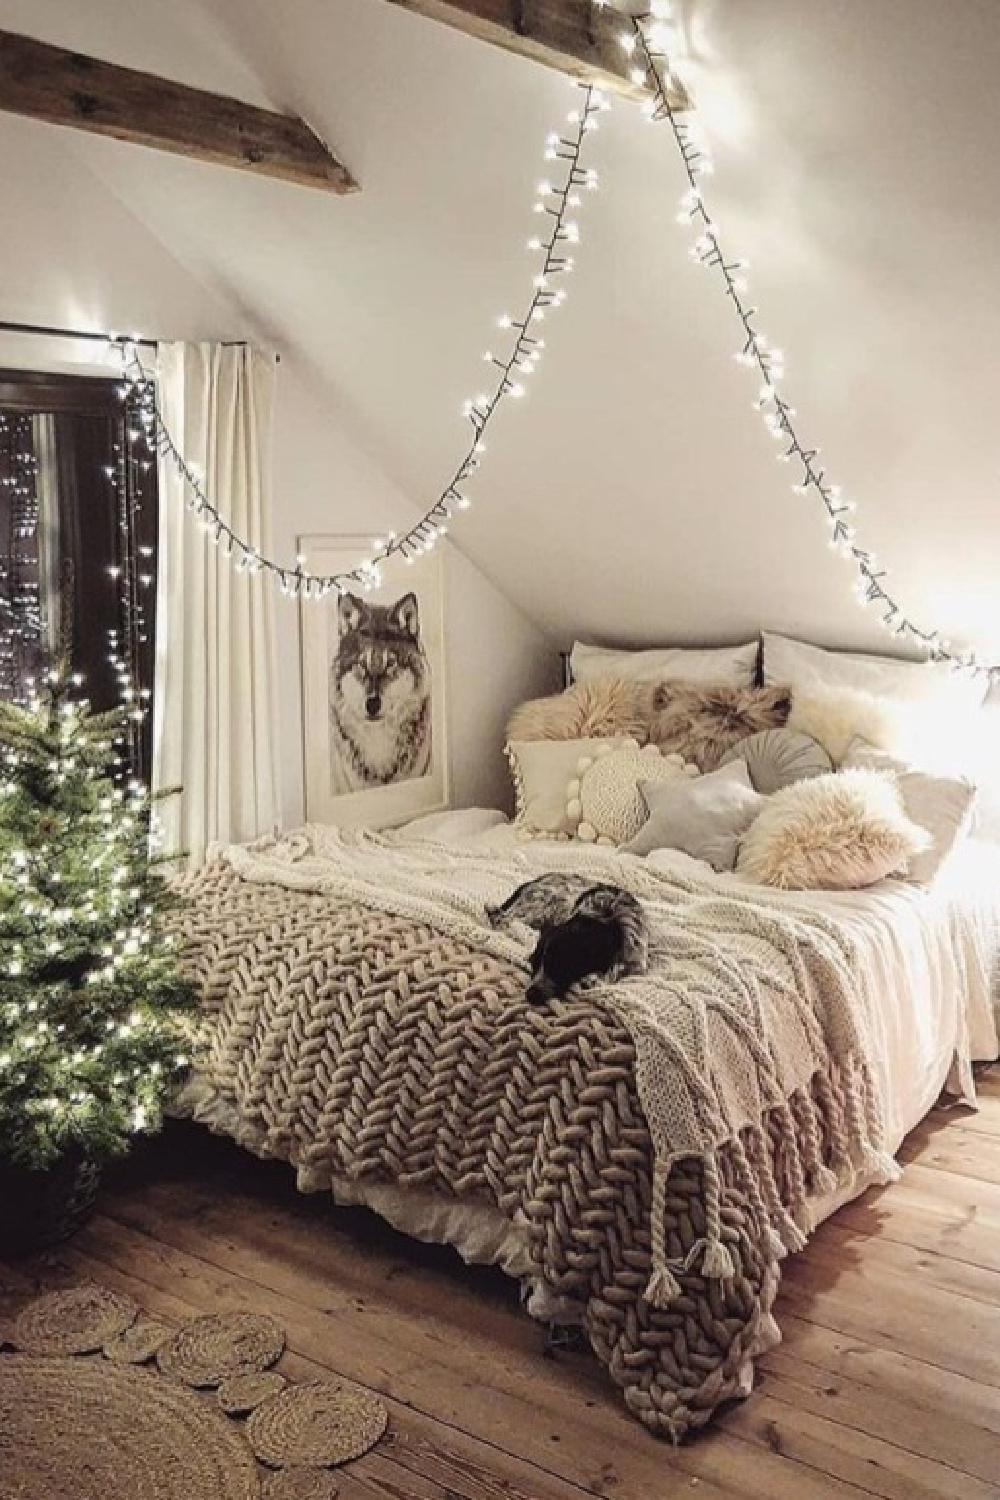 Cozy bedroom decorated Scandi Christmas style - CozyWinterWorld on Tumblr. #cozybedroom #christmasdecor